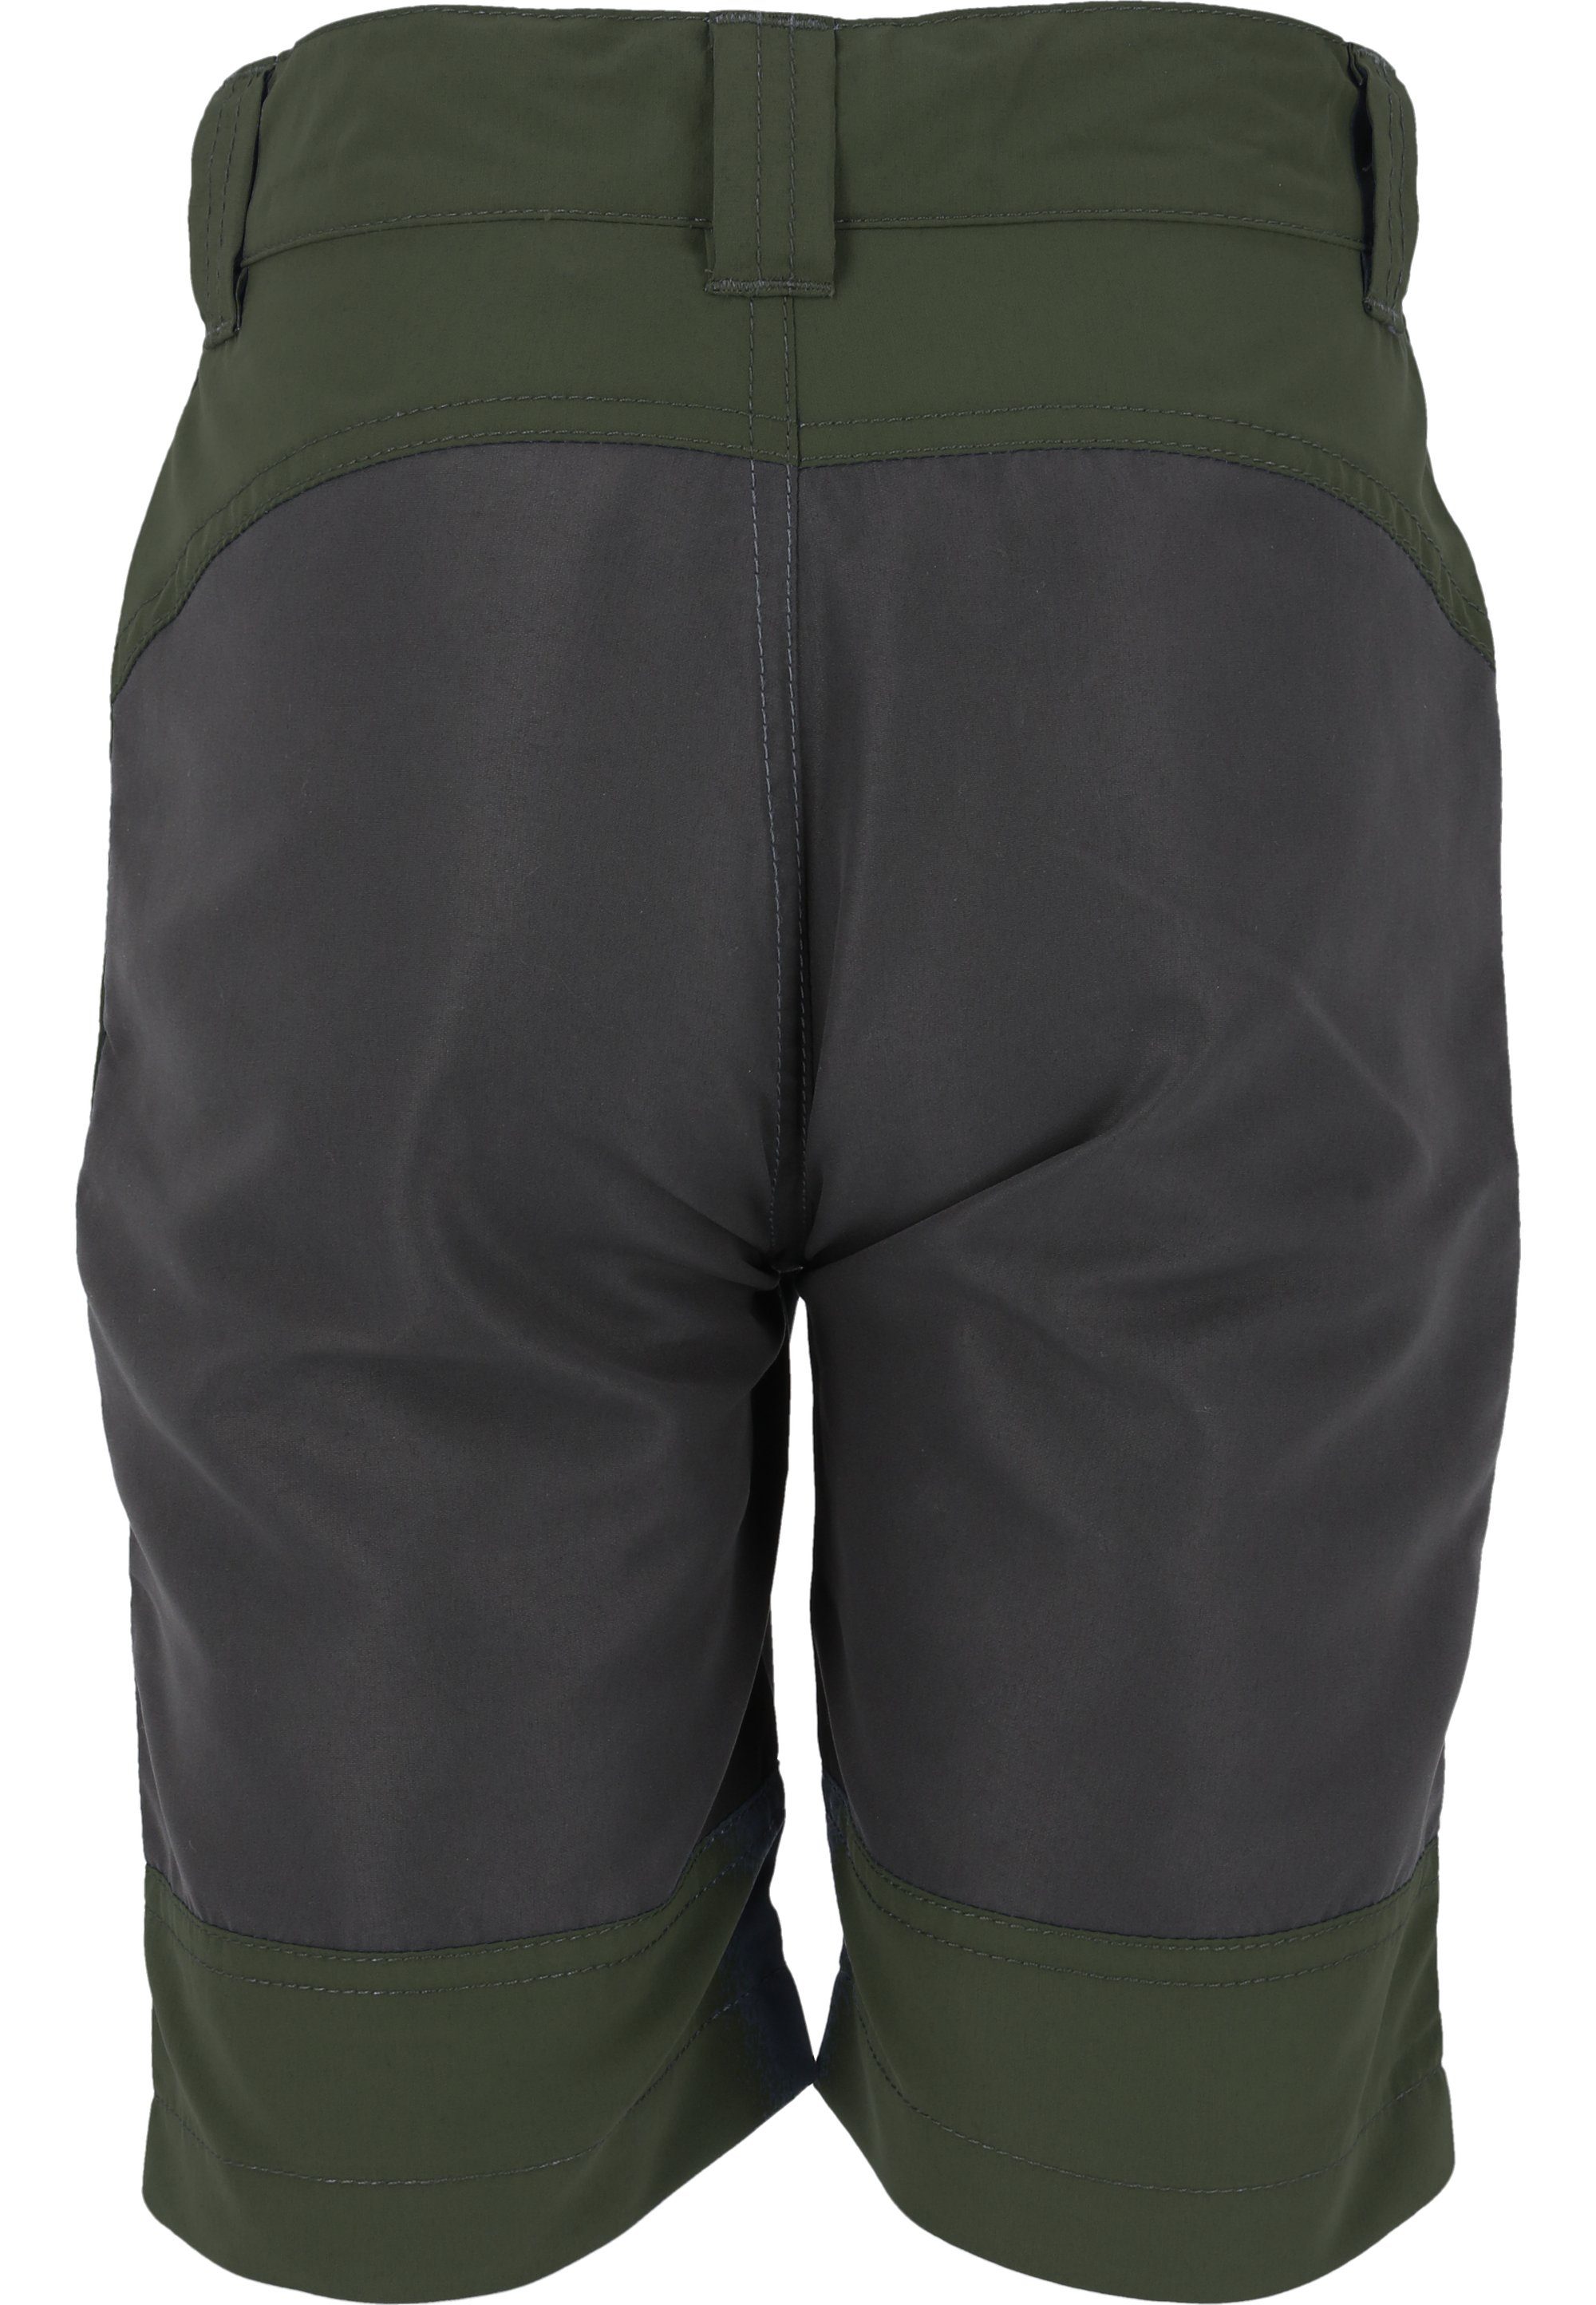 ZIGZAG Shorts robustem olivgrün-schwarz Material aus Atlantic